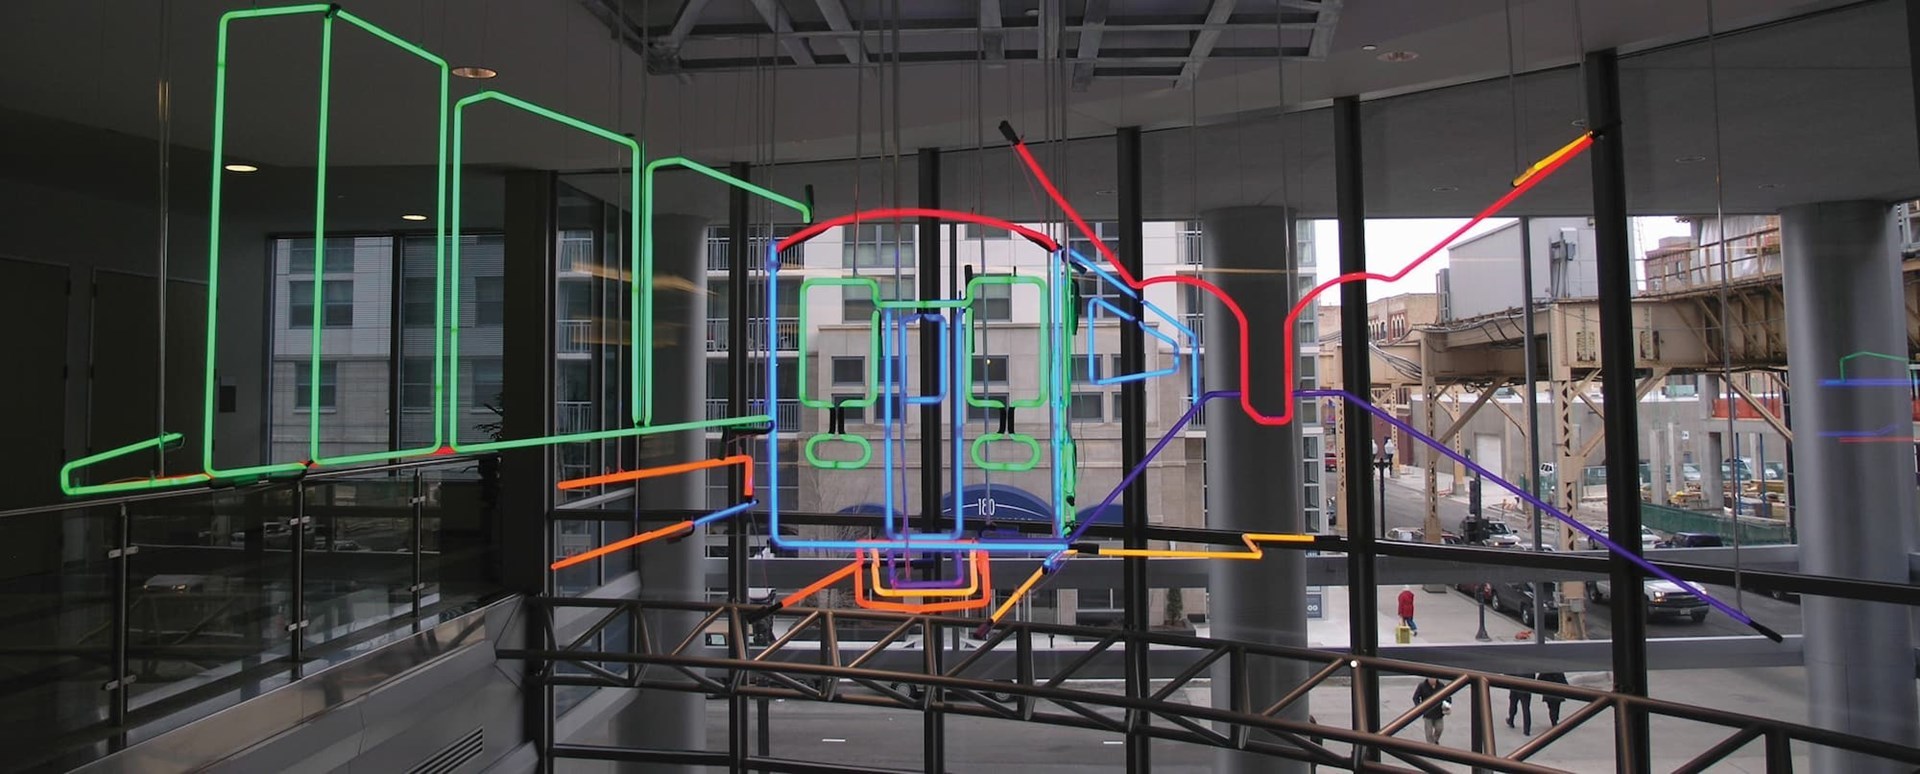 Neon train sculpture